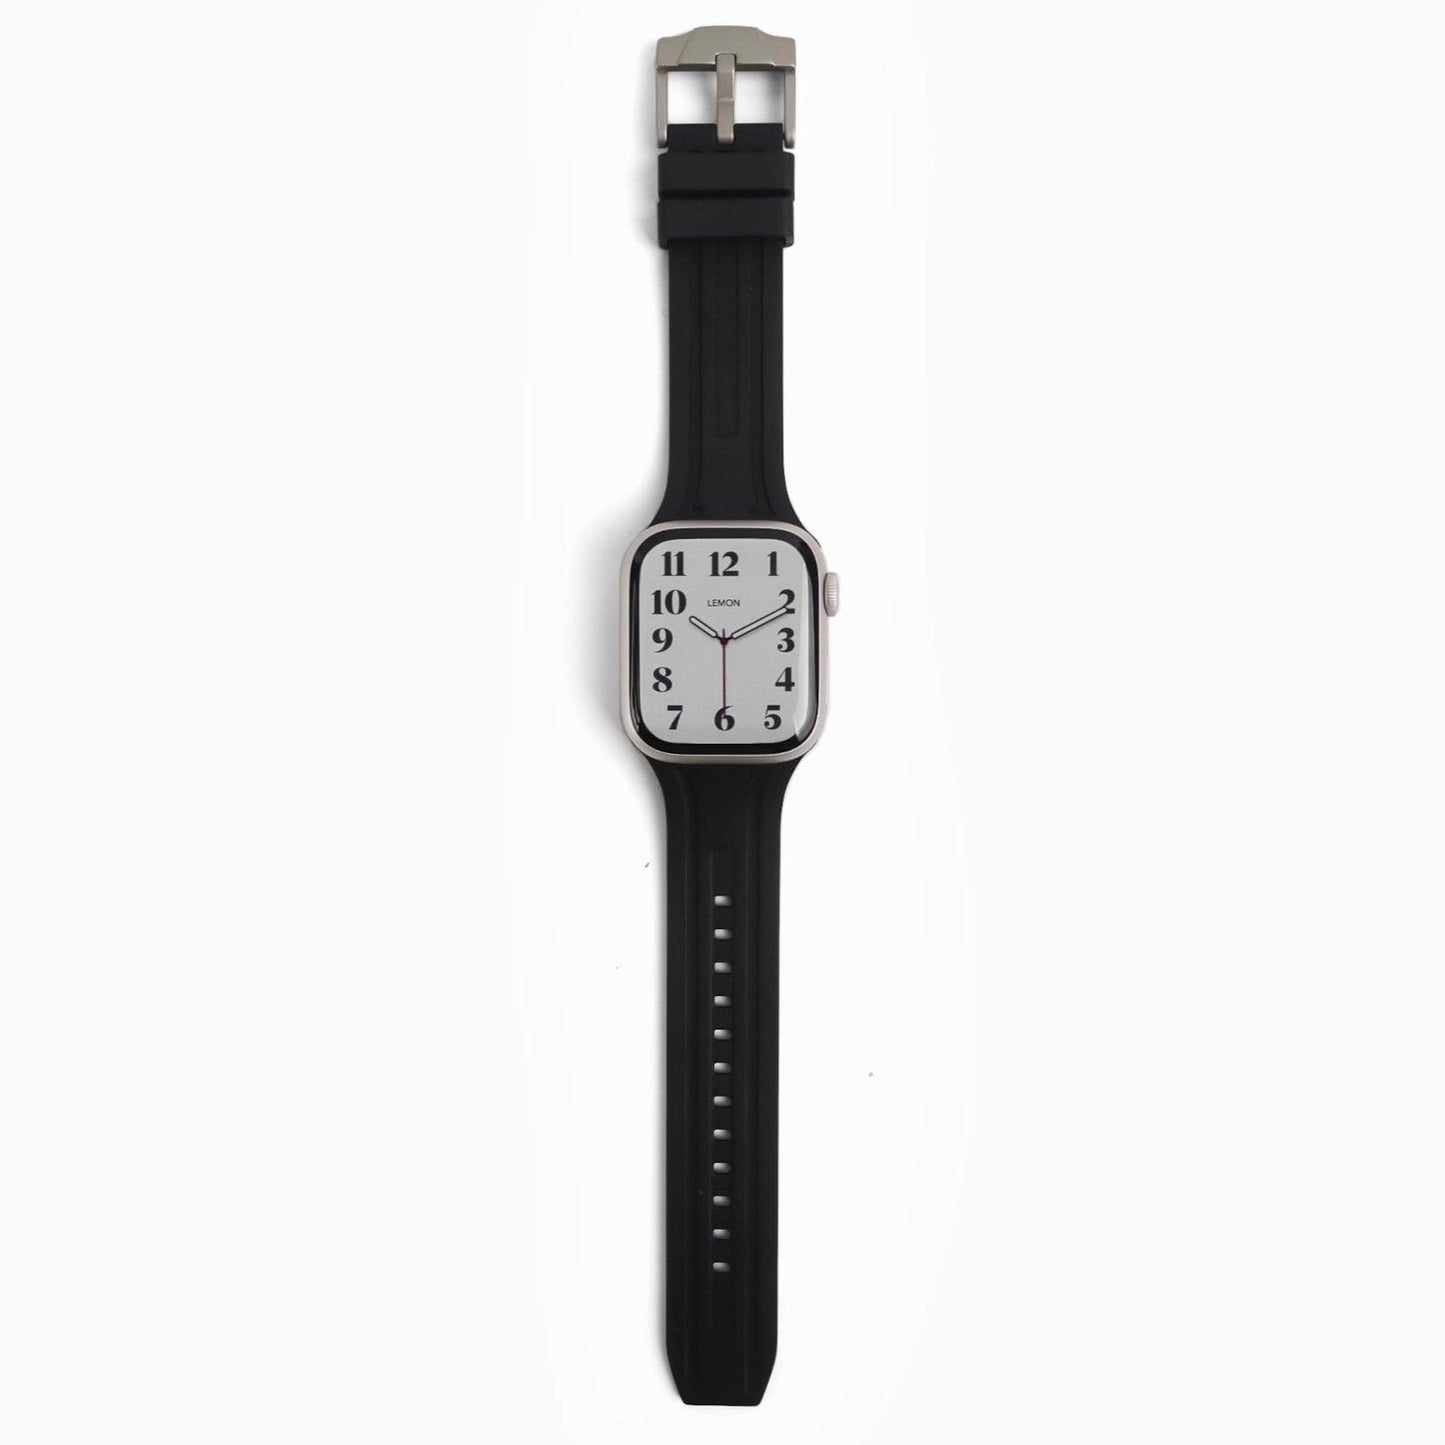 Surfer Apple Watch Band - Black